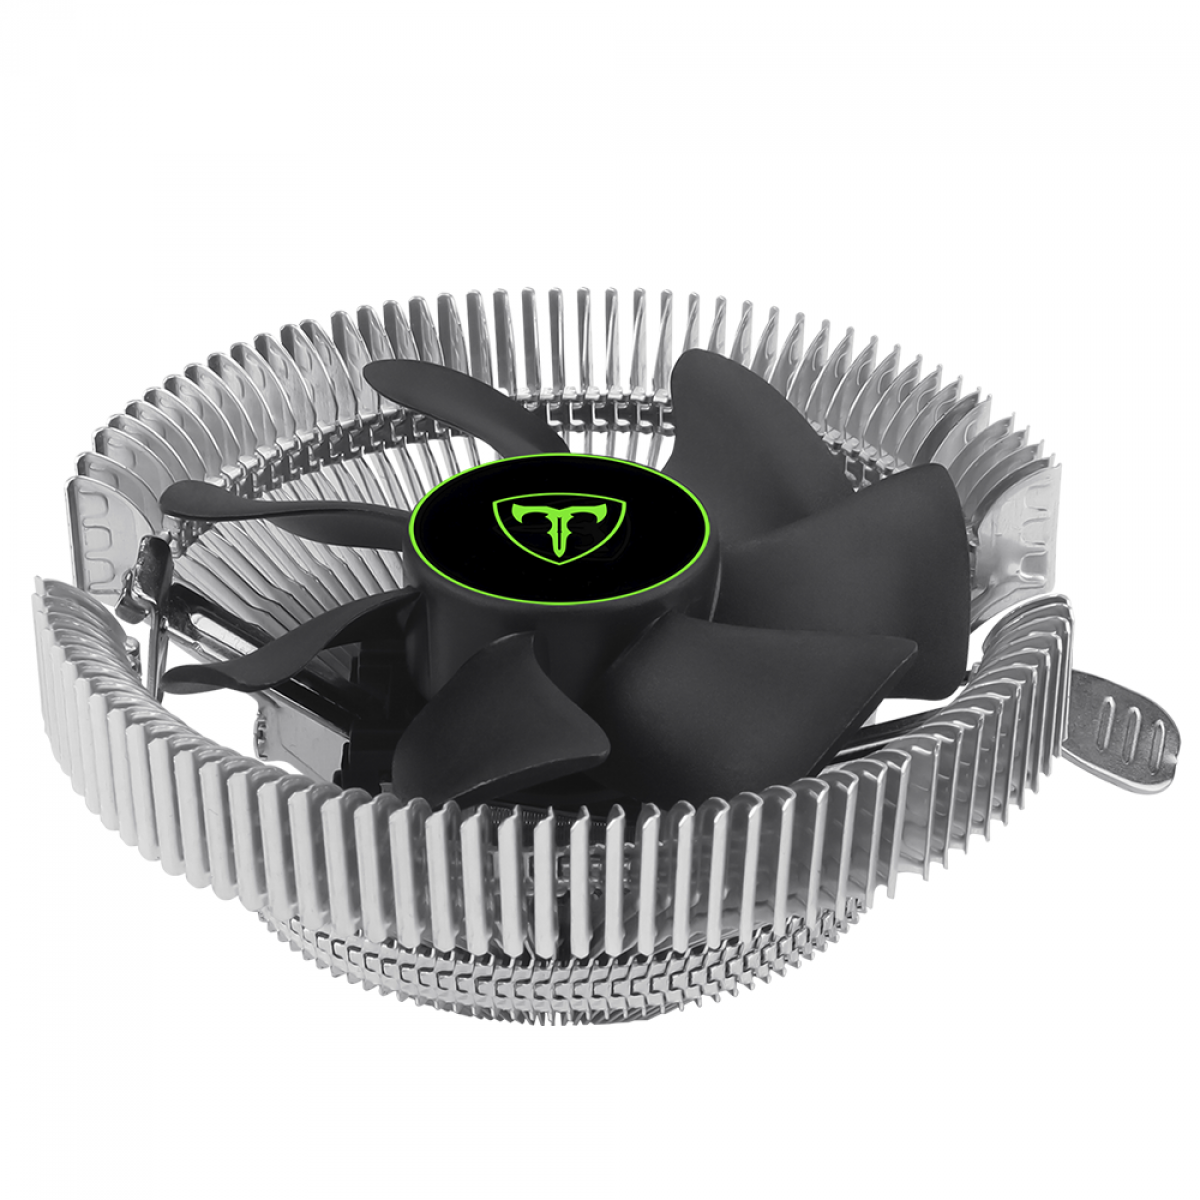 Cooler para Processador T-Dagger Viti, 90mm, Intel-AMD, T-GC9110